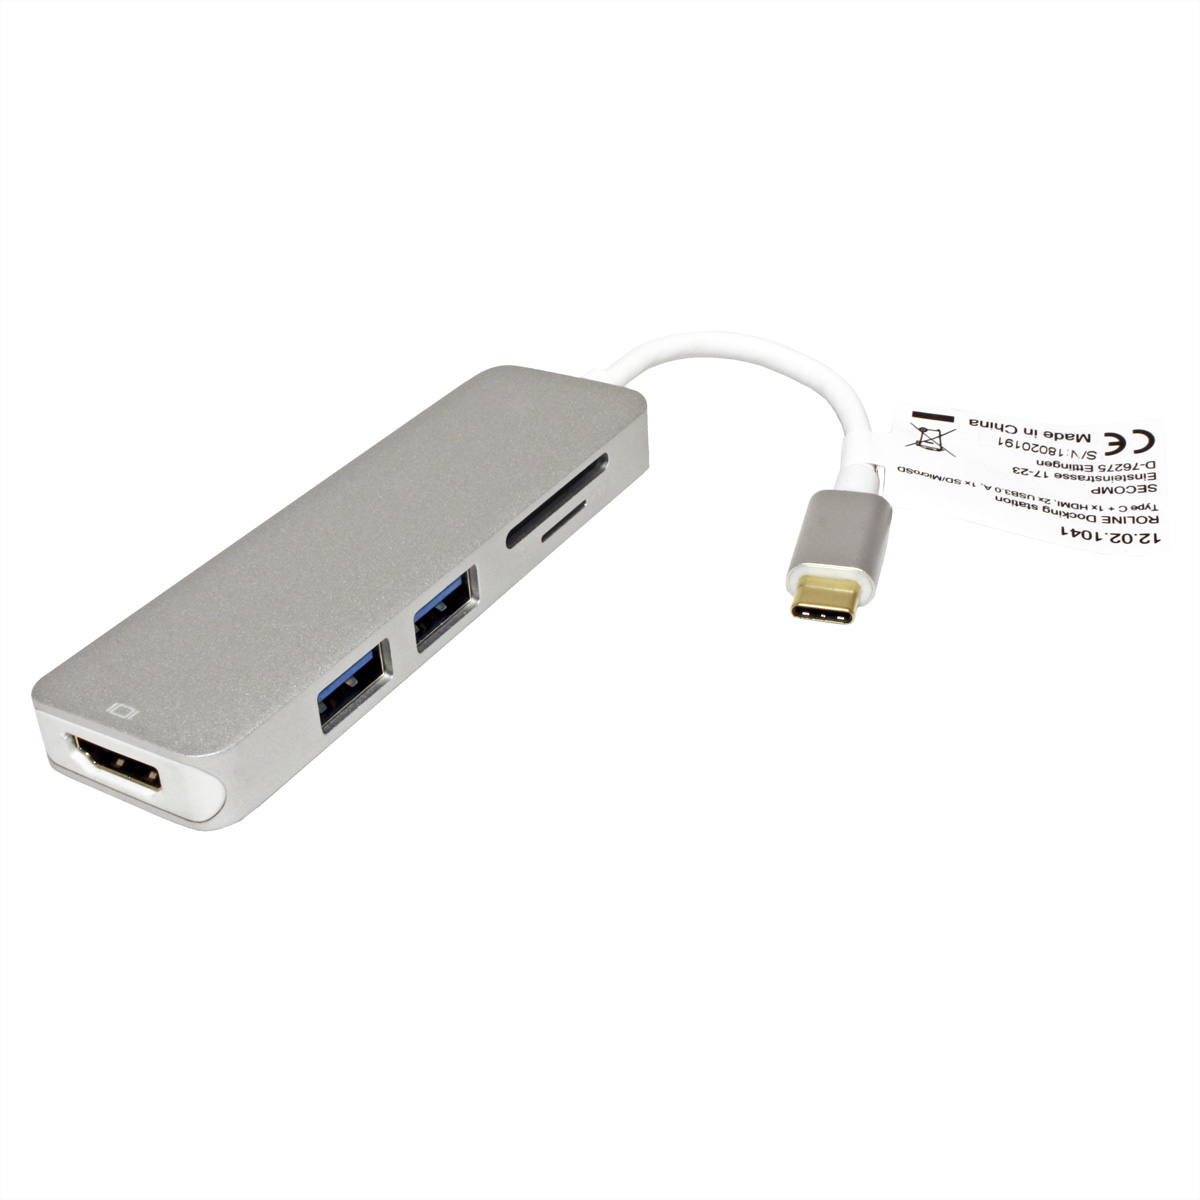 ROLINE Dockingstation C, 4K HDMI Notebook-Docking-Station, USB Typ silberfarben